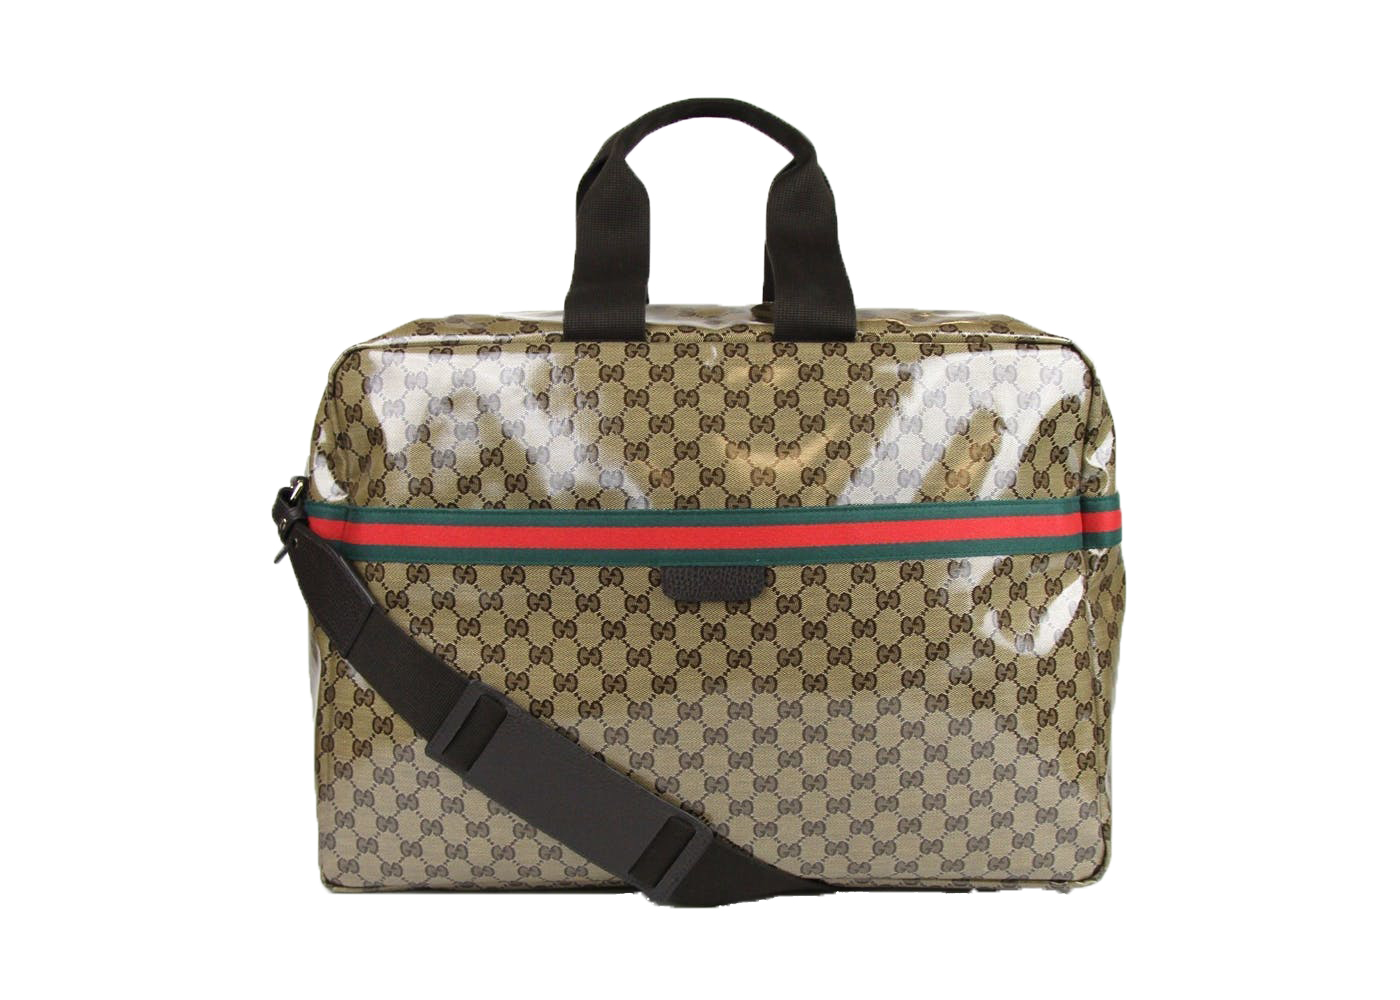 Gucci Travel Bags for Women - Poshmark